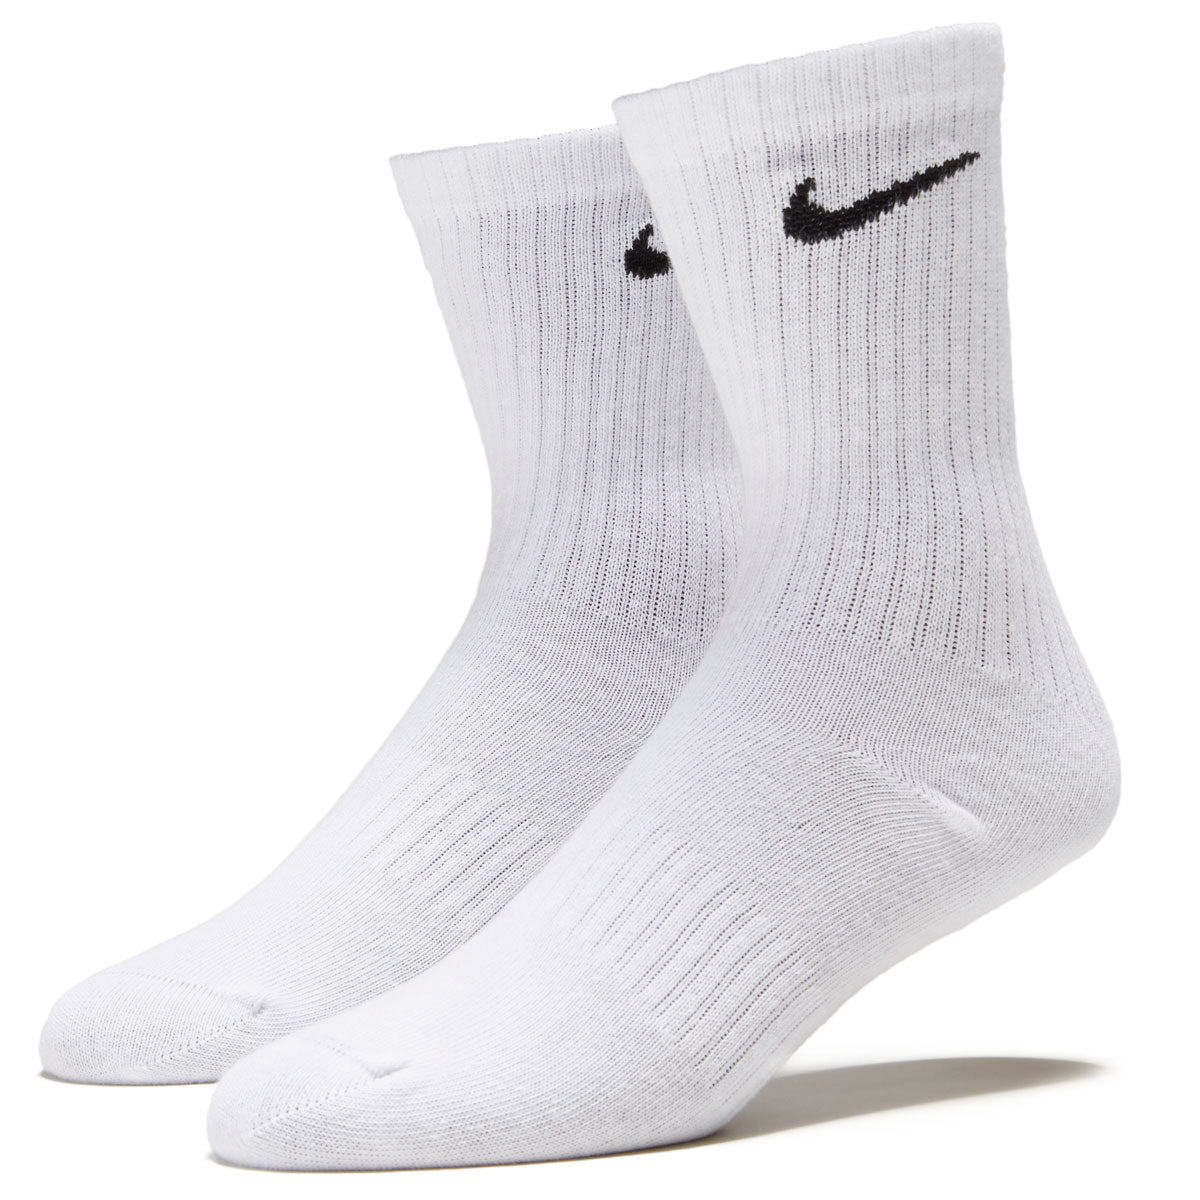 Nike Everyday Lightweight Training Crew Socks - White/Black image 1